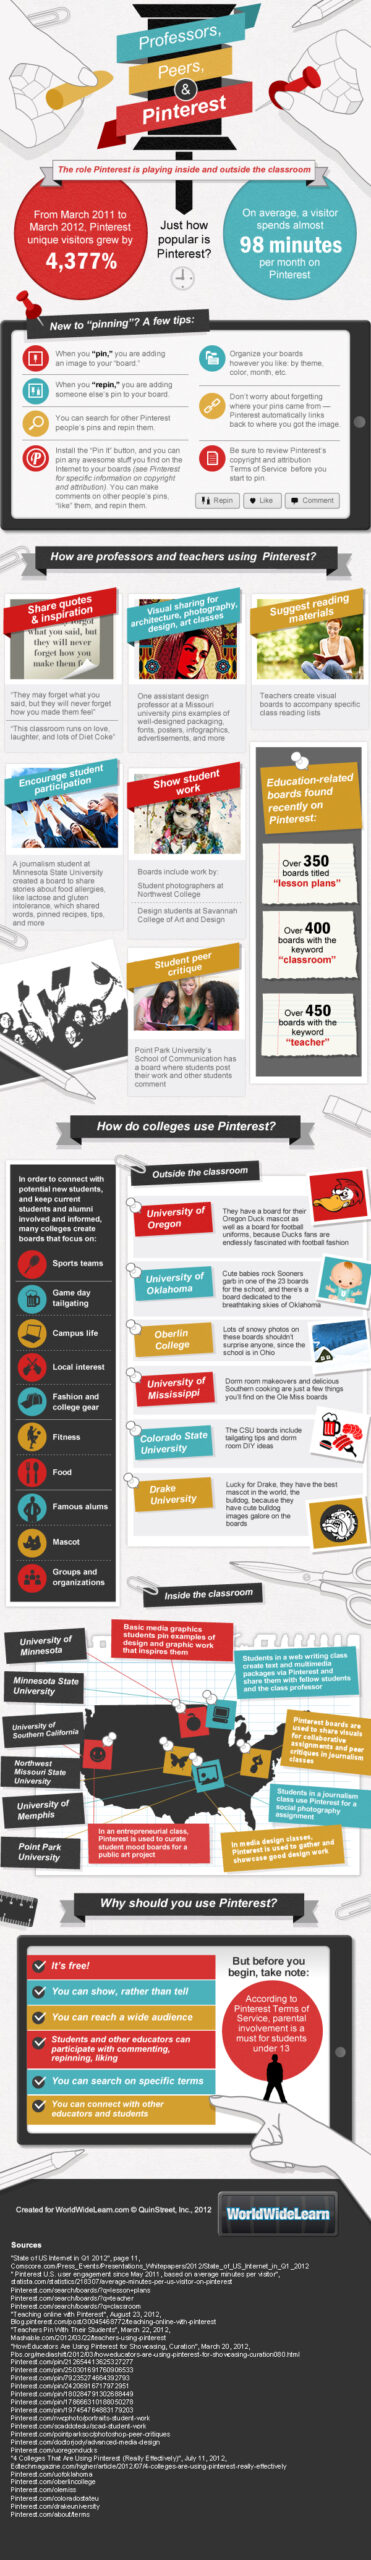 Professors, Peers, & Pinterest: Infographic